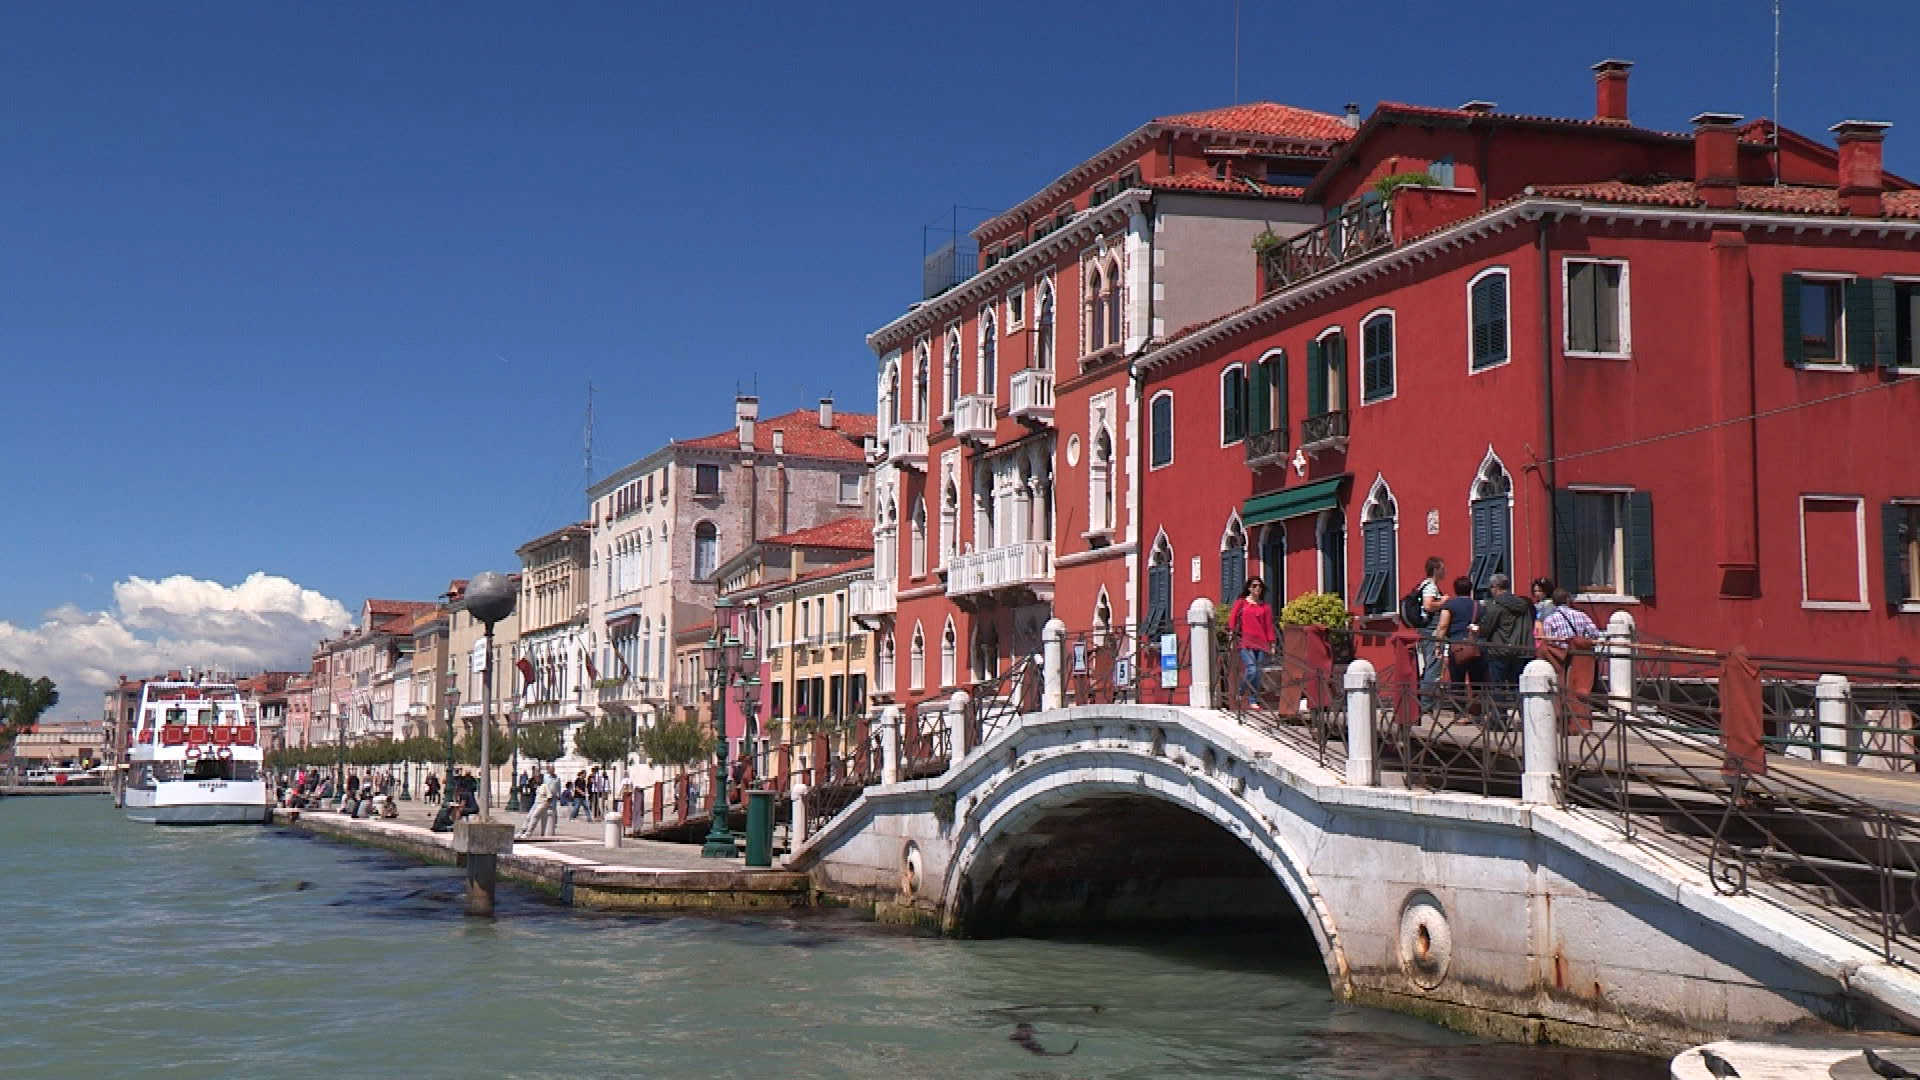 Venice Lagoon: Zattere waterfront